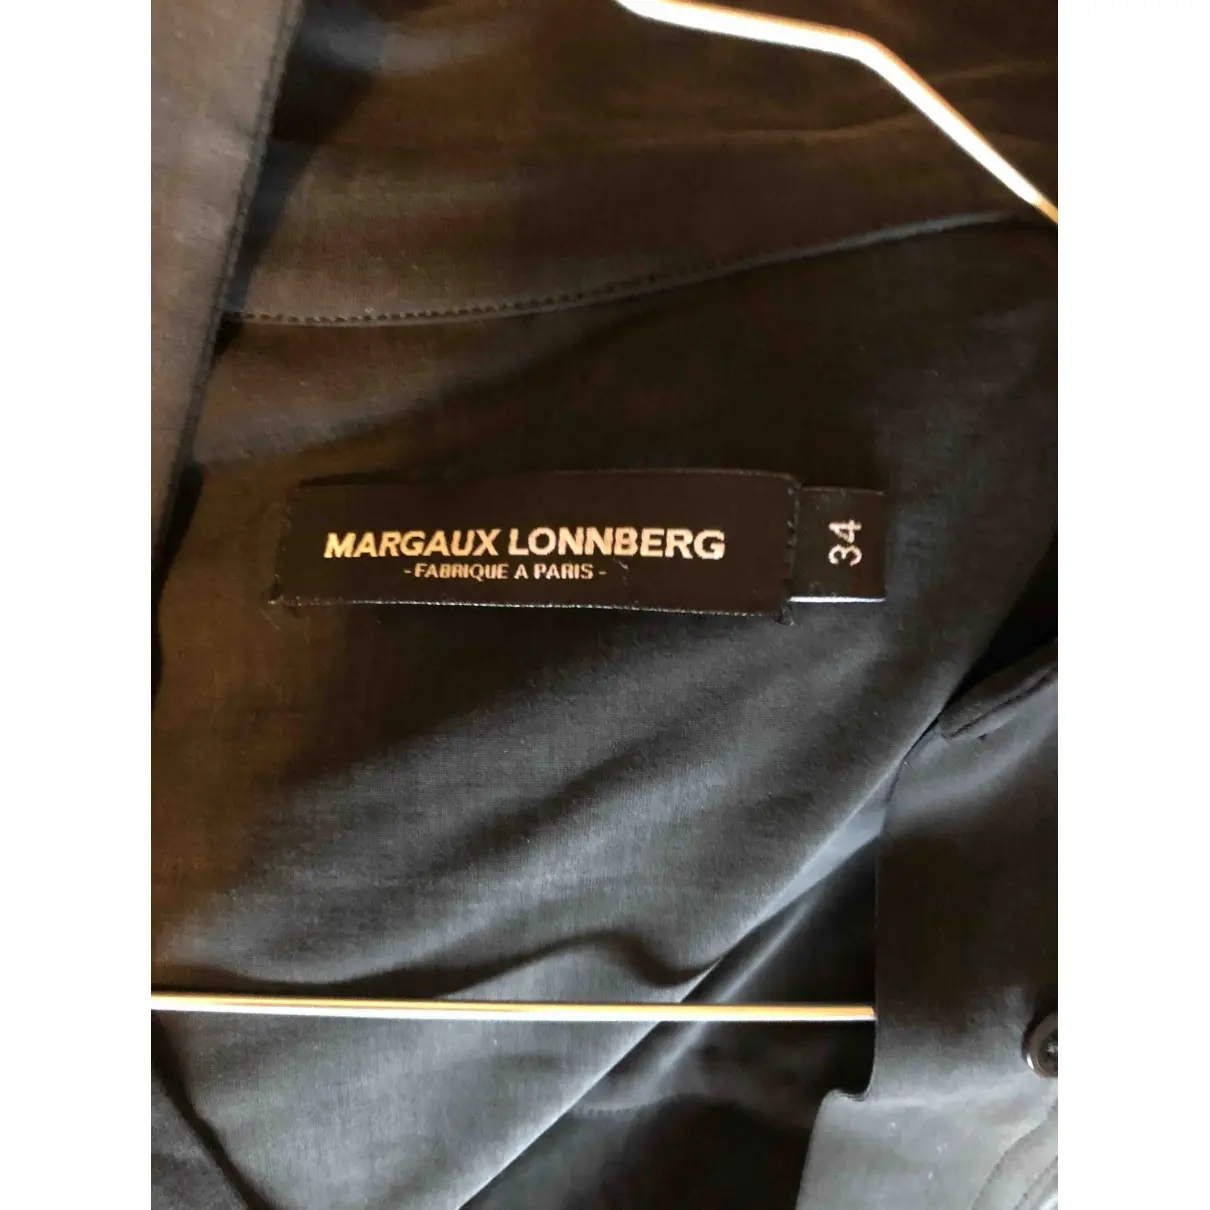 Buy Margaux Lonnberg Jumpsuit online